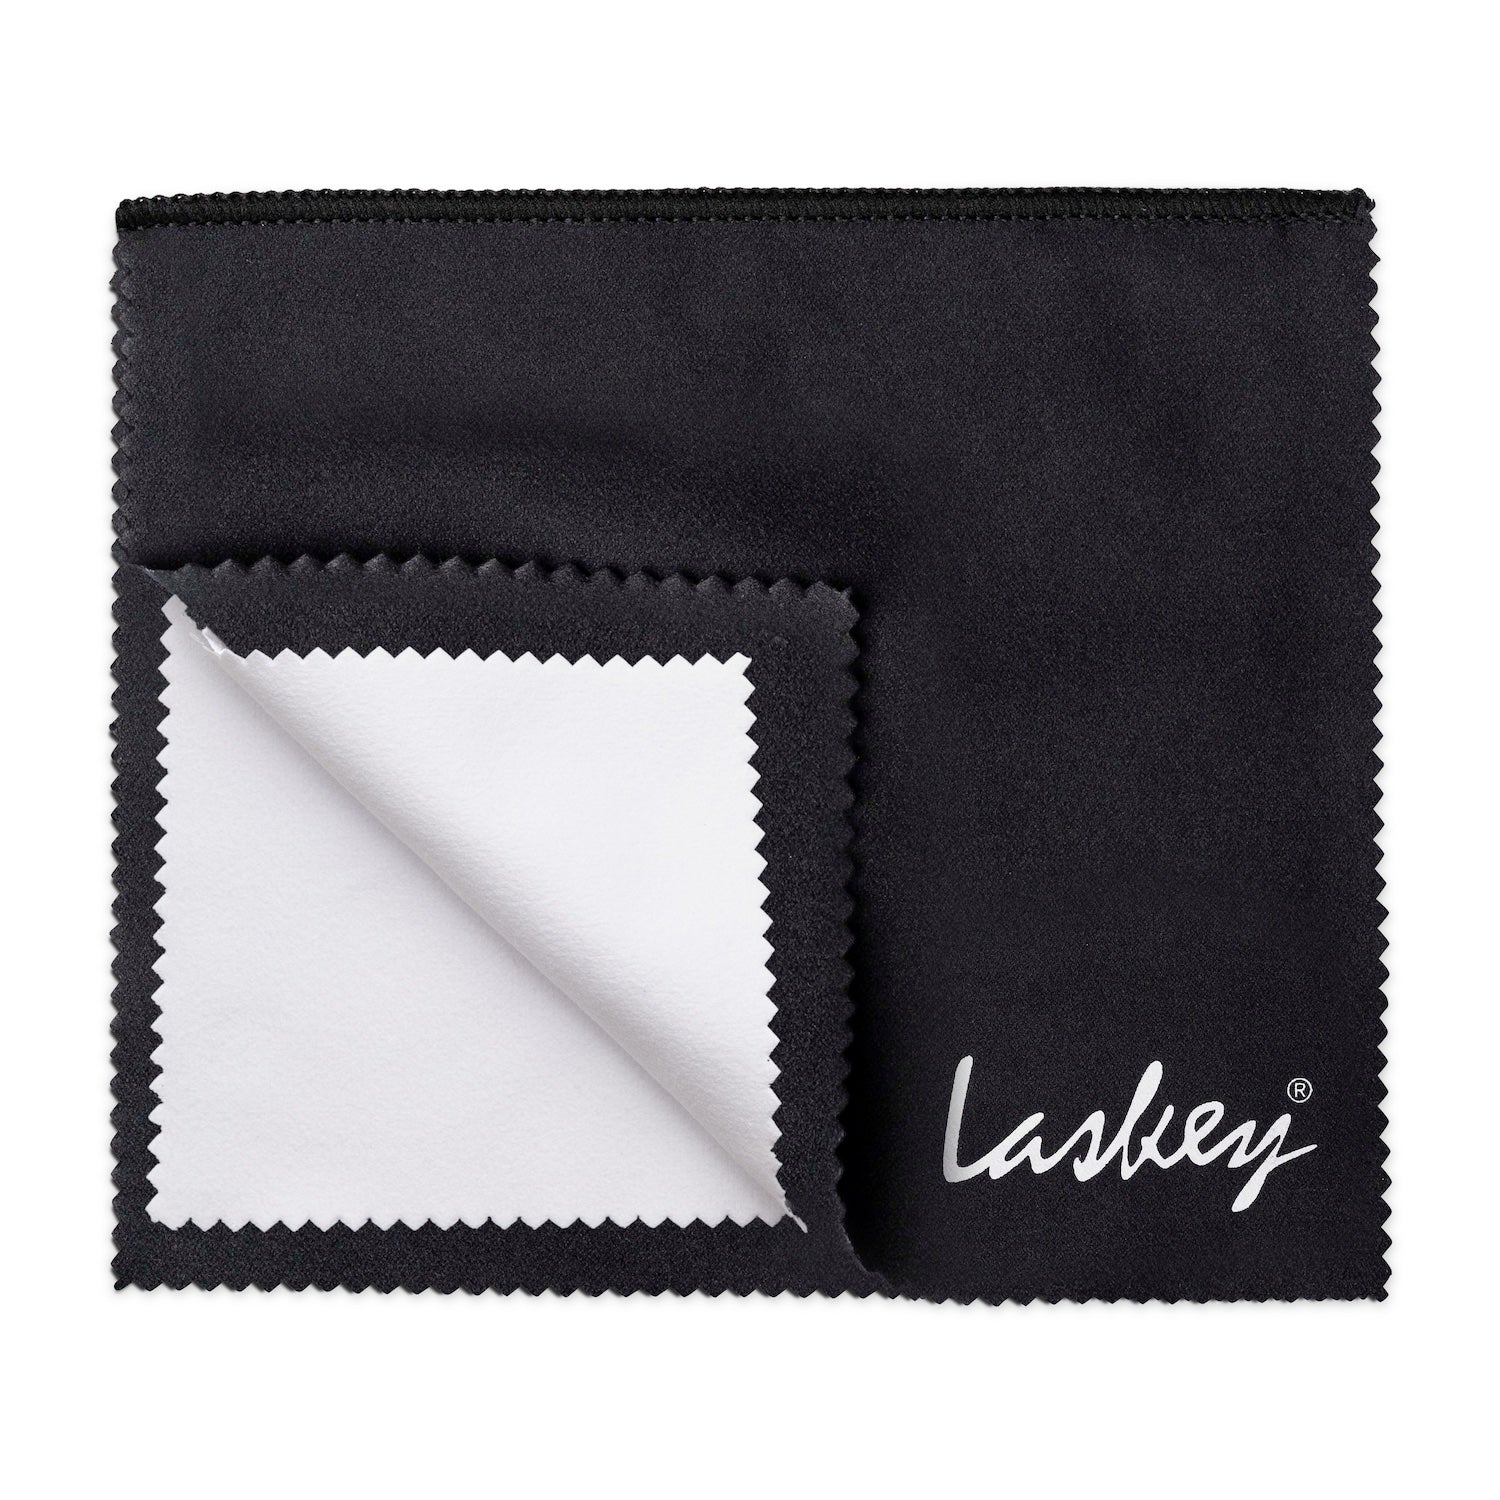 laskey-pre-treated-polishing-cloth-3